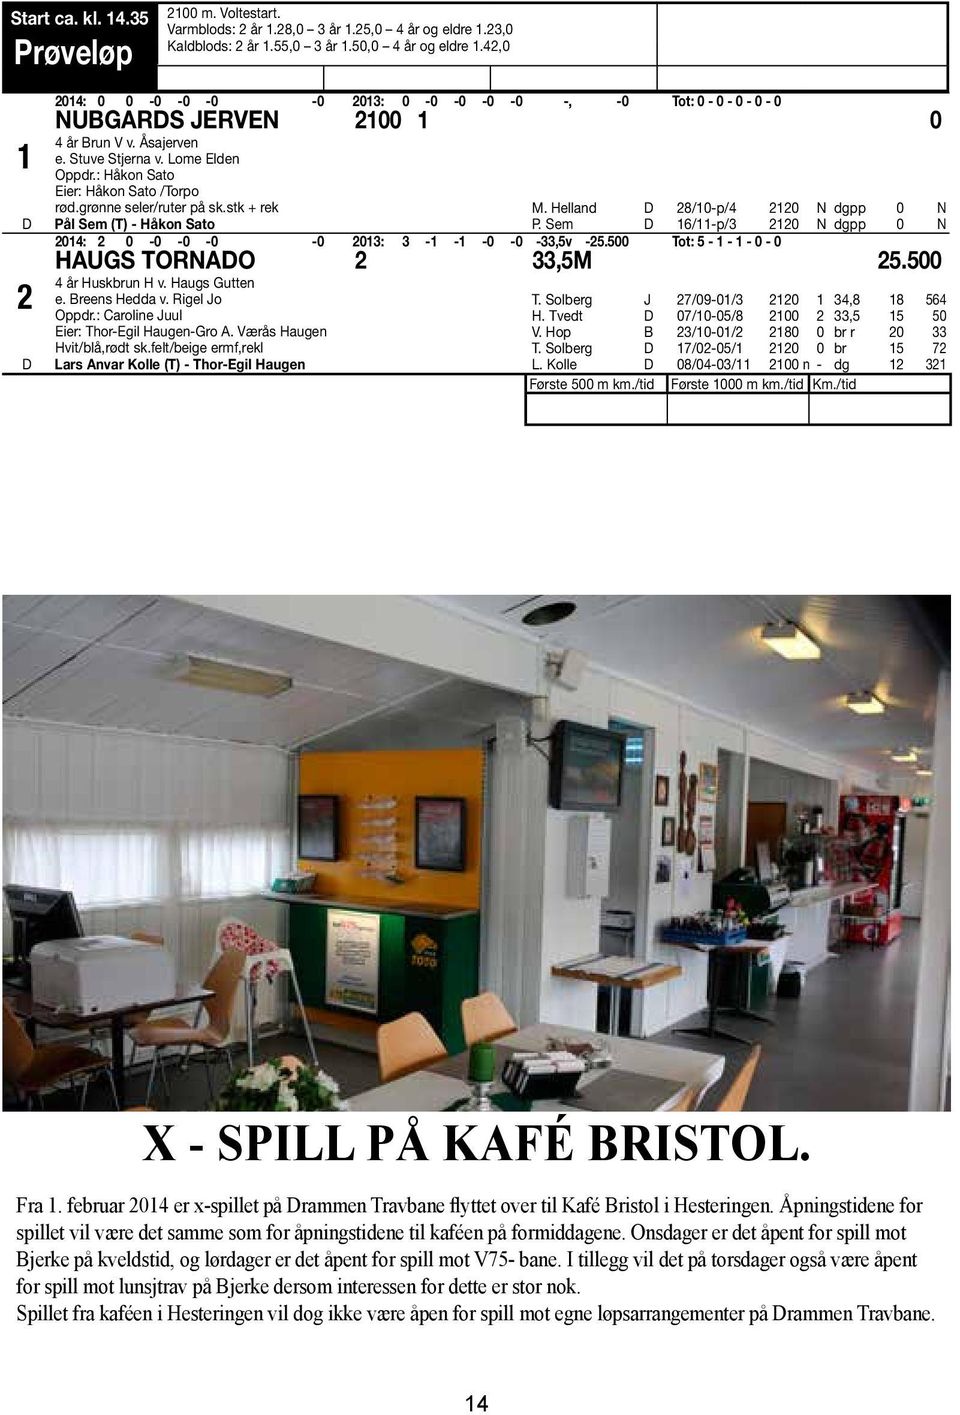 grønne seler/ruter på sk.stk + rek M. Helland 28/10-p/4 2120 N dgpp 0 N Pål Sem (T) - Håkon Sato P. Sem 16/11-p/3 2120 N dgpp 0 N 2014: 2 0-0 -0-0 -0 2013: 3-1 -1-0 -0-33,5v -25.